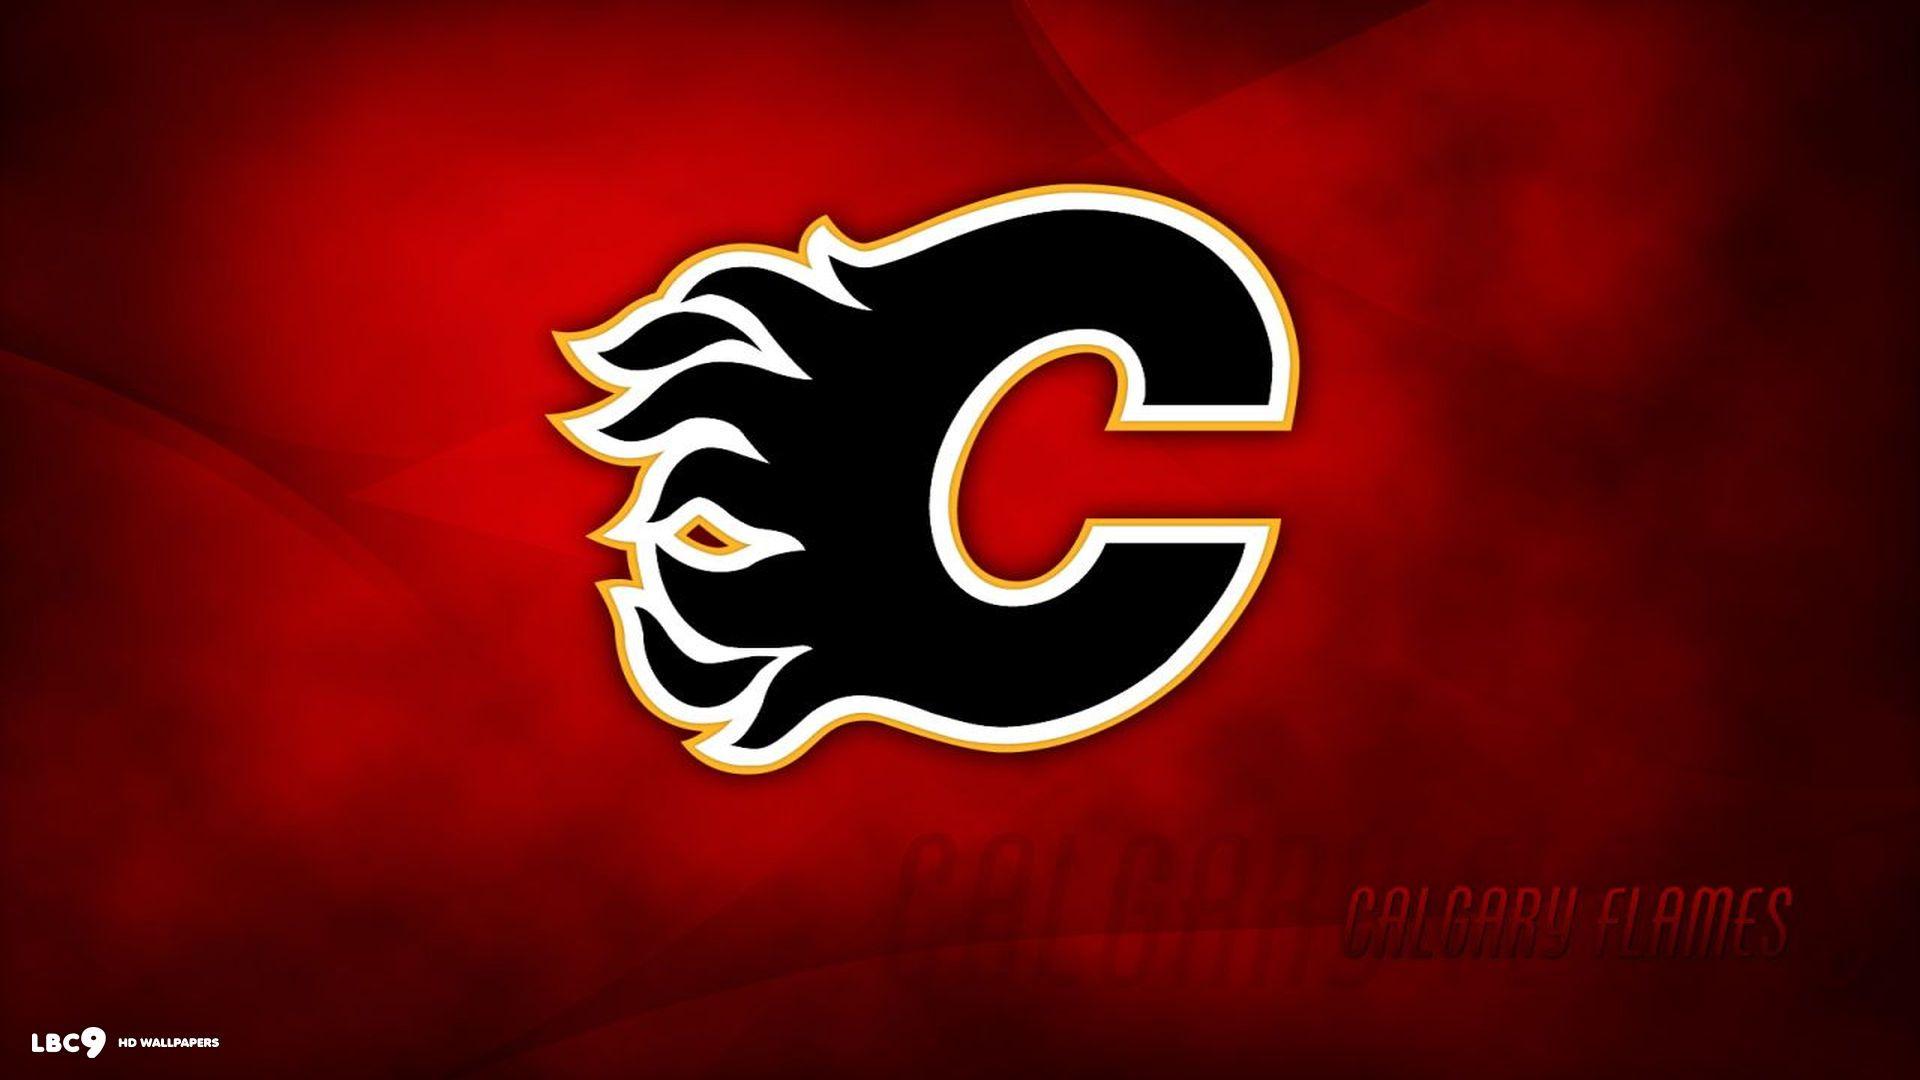 Calgary Flames Wallpaper 2 3. Download Wallpaper